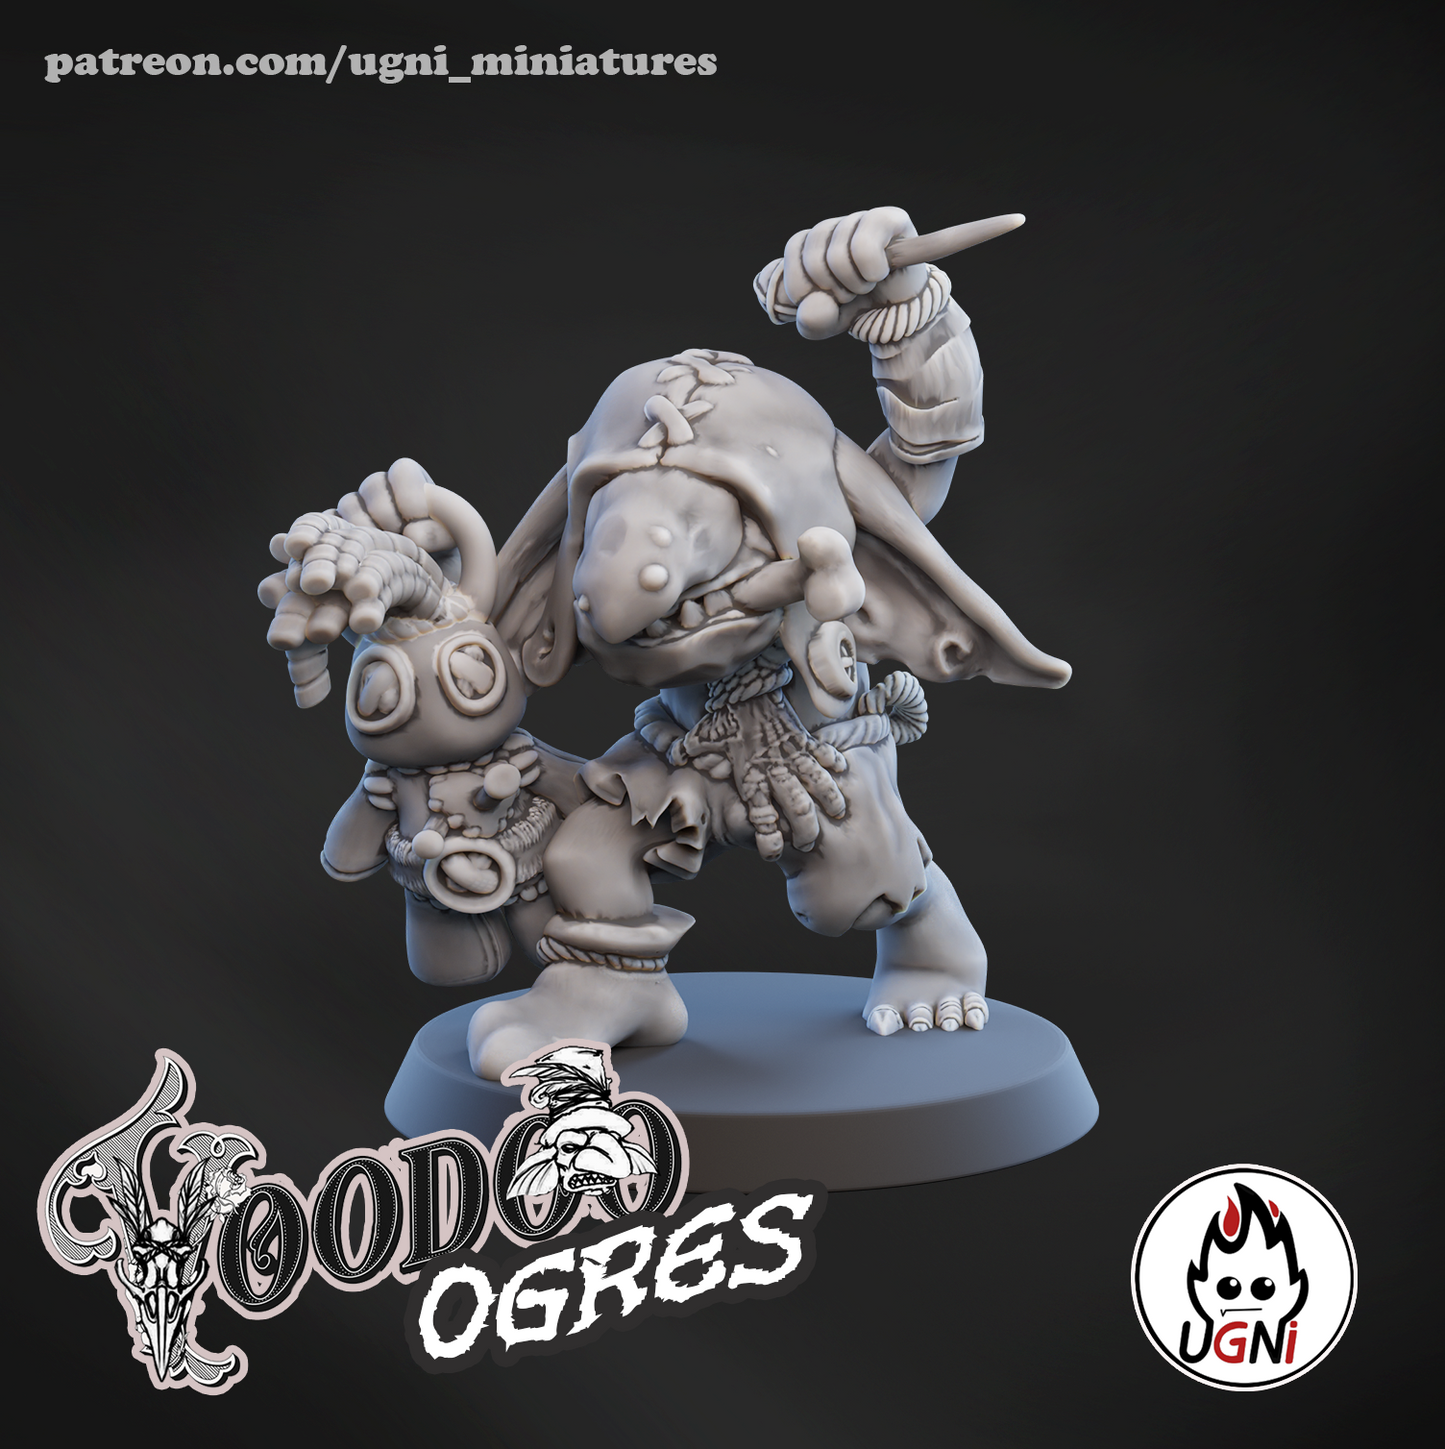 Ogres Team - Voodoo Ogres | UGNI Miniatures | Resin